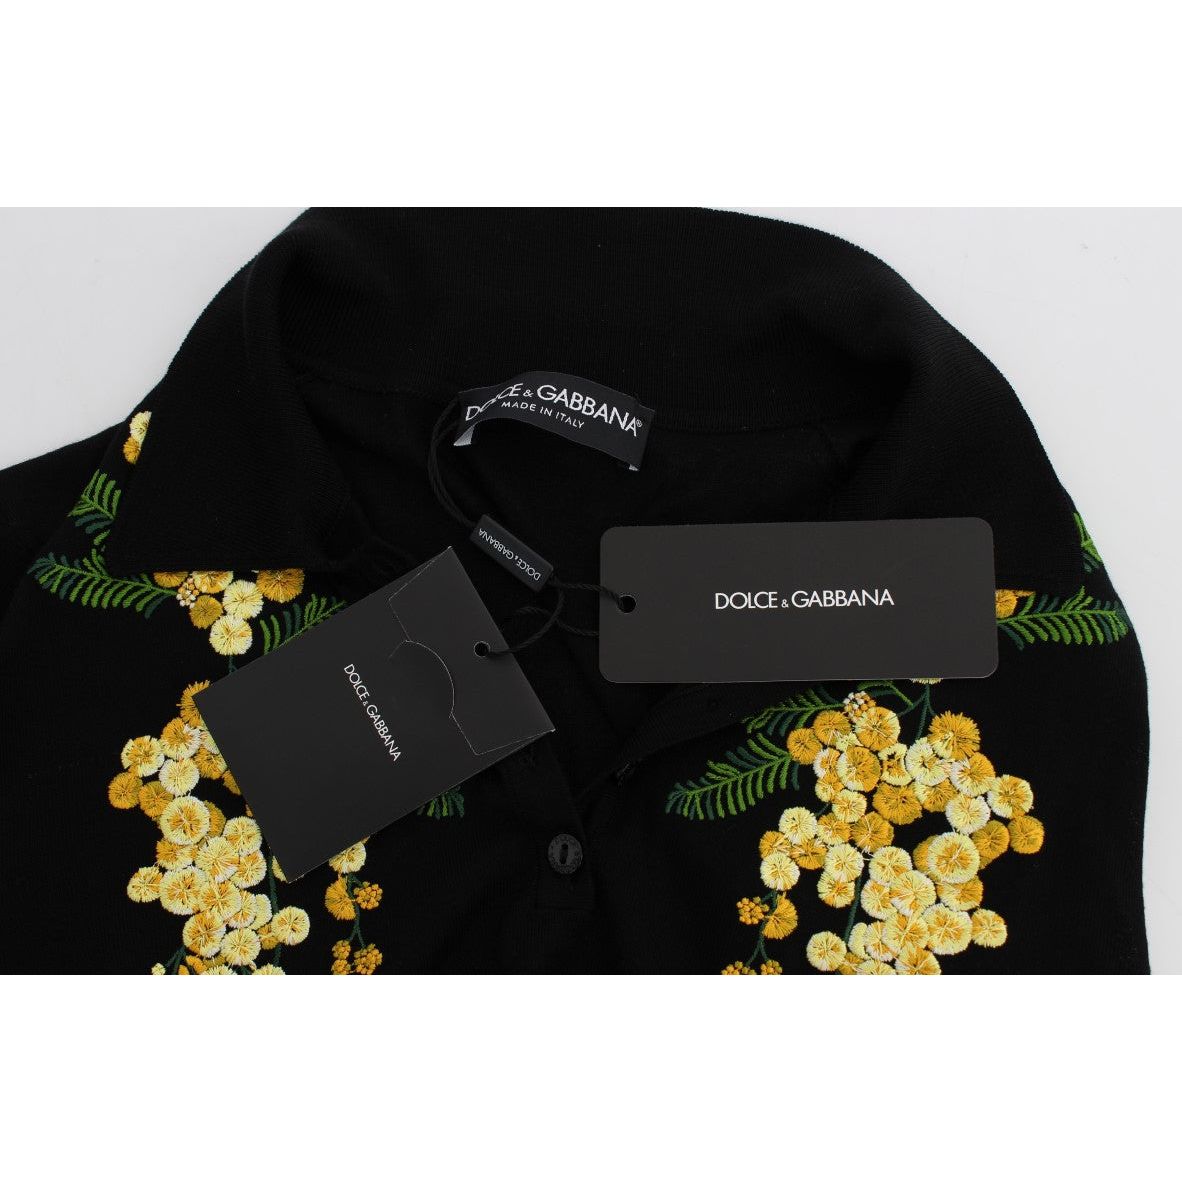 Dolce & Gabbana Elegant Black Silk Floral Polo Top black-silk-floral-embroidered-polo-top 178821-black-silk-floral-embroidered-polo-top-4.jpg